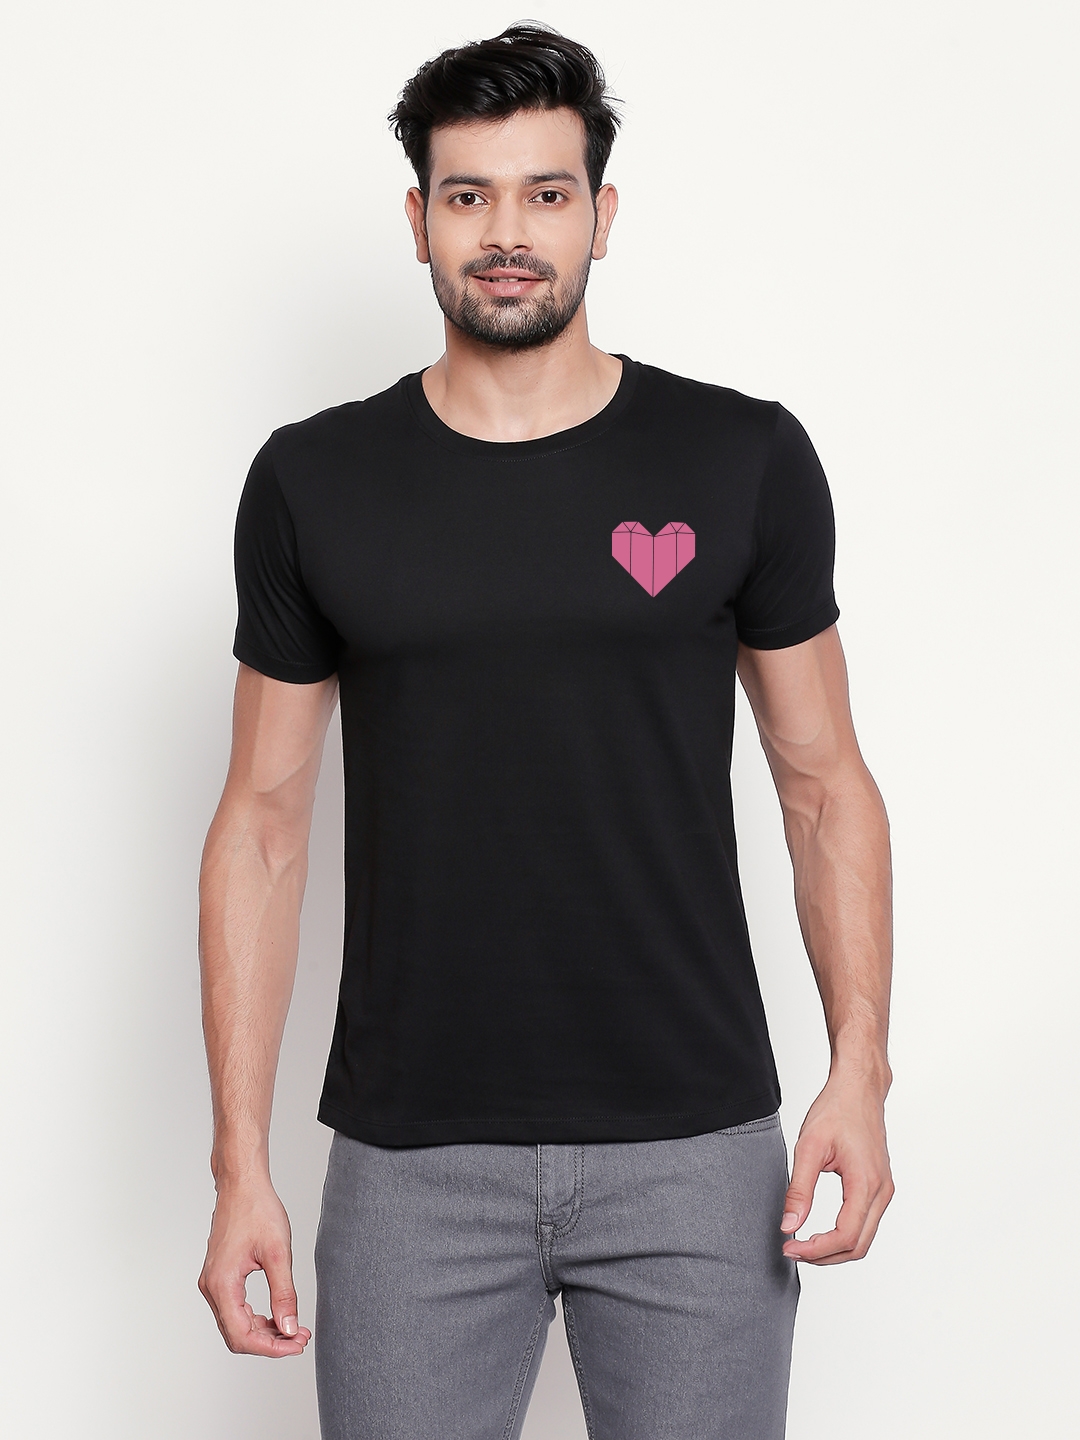 creativeideas.store | Origami Heart Black Tshirt